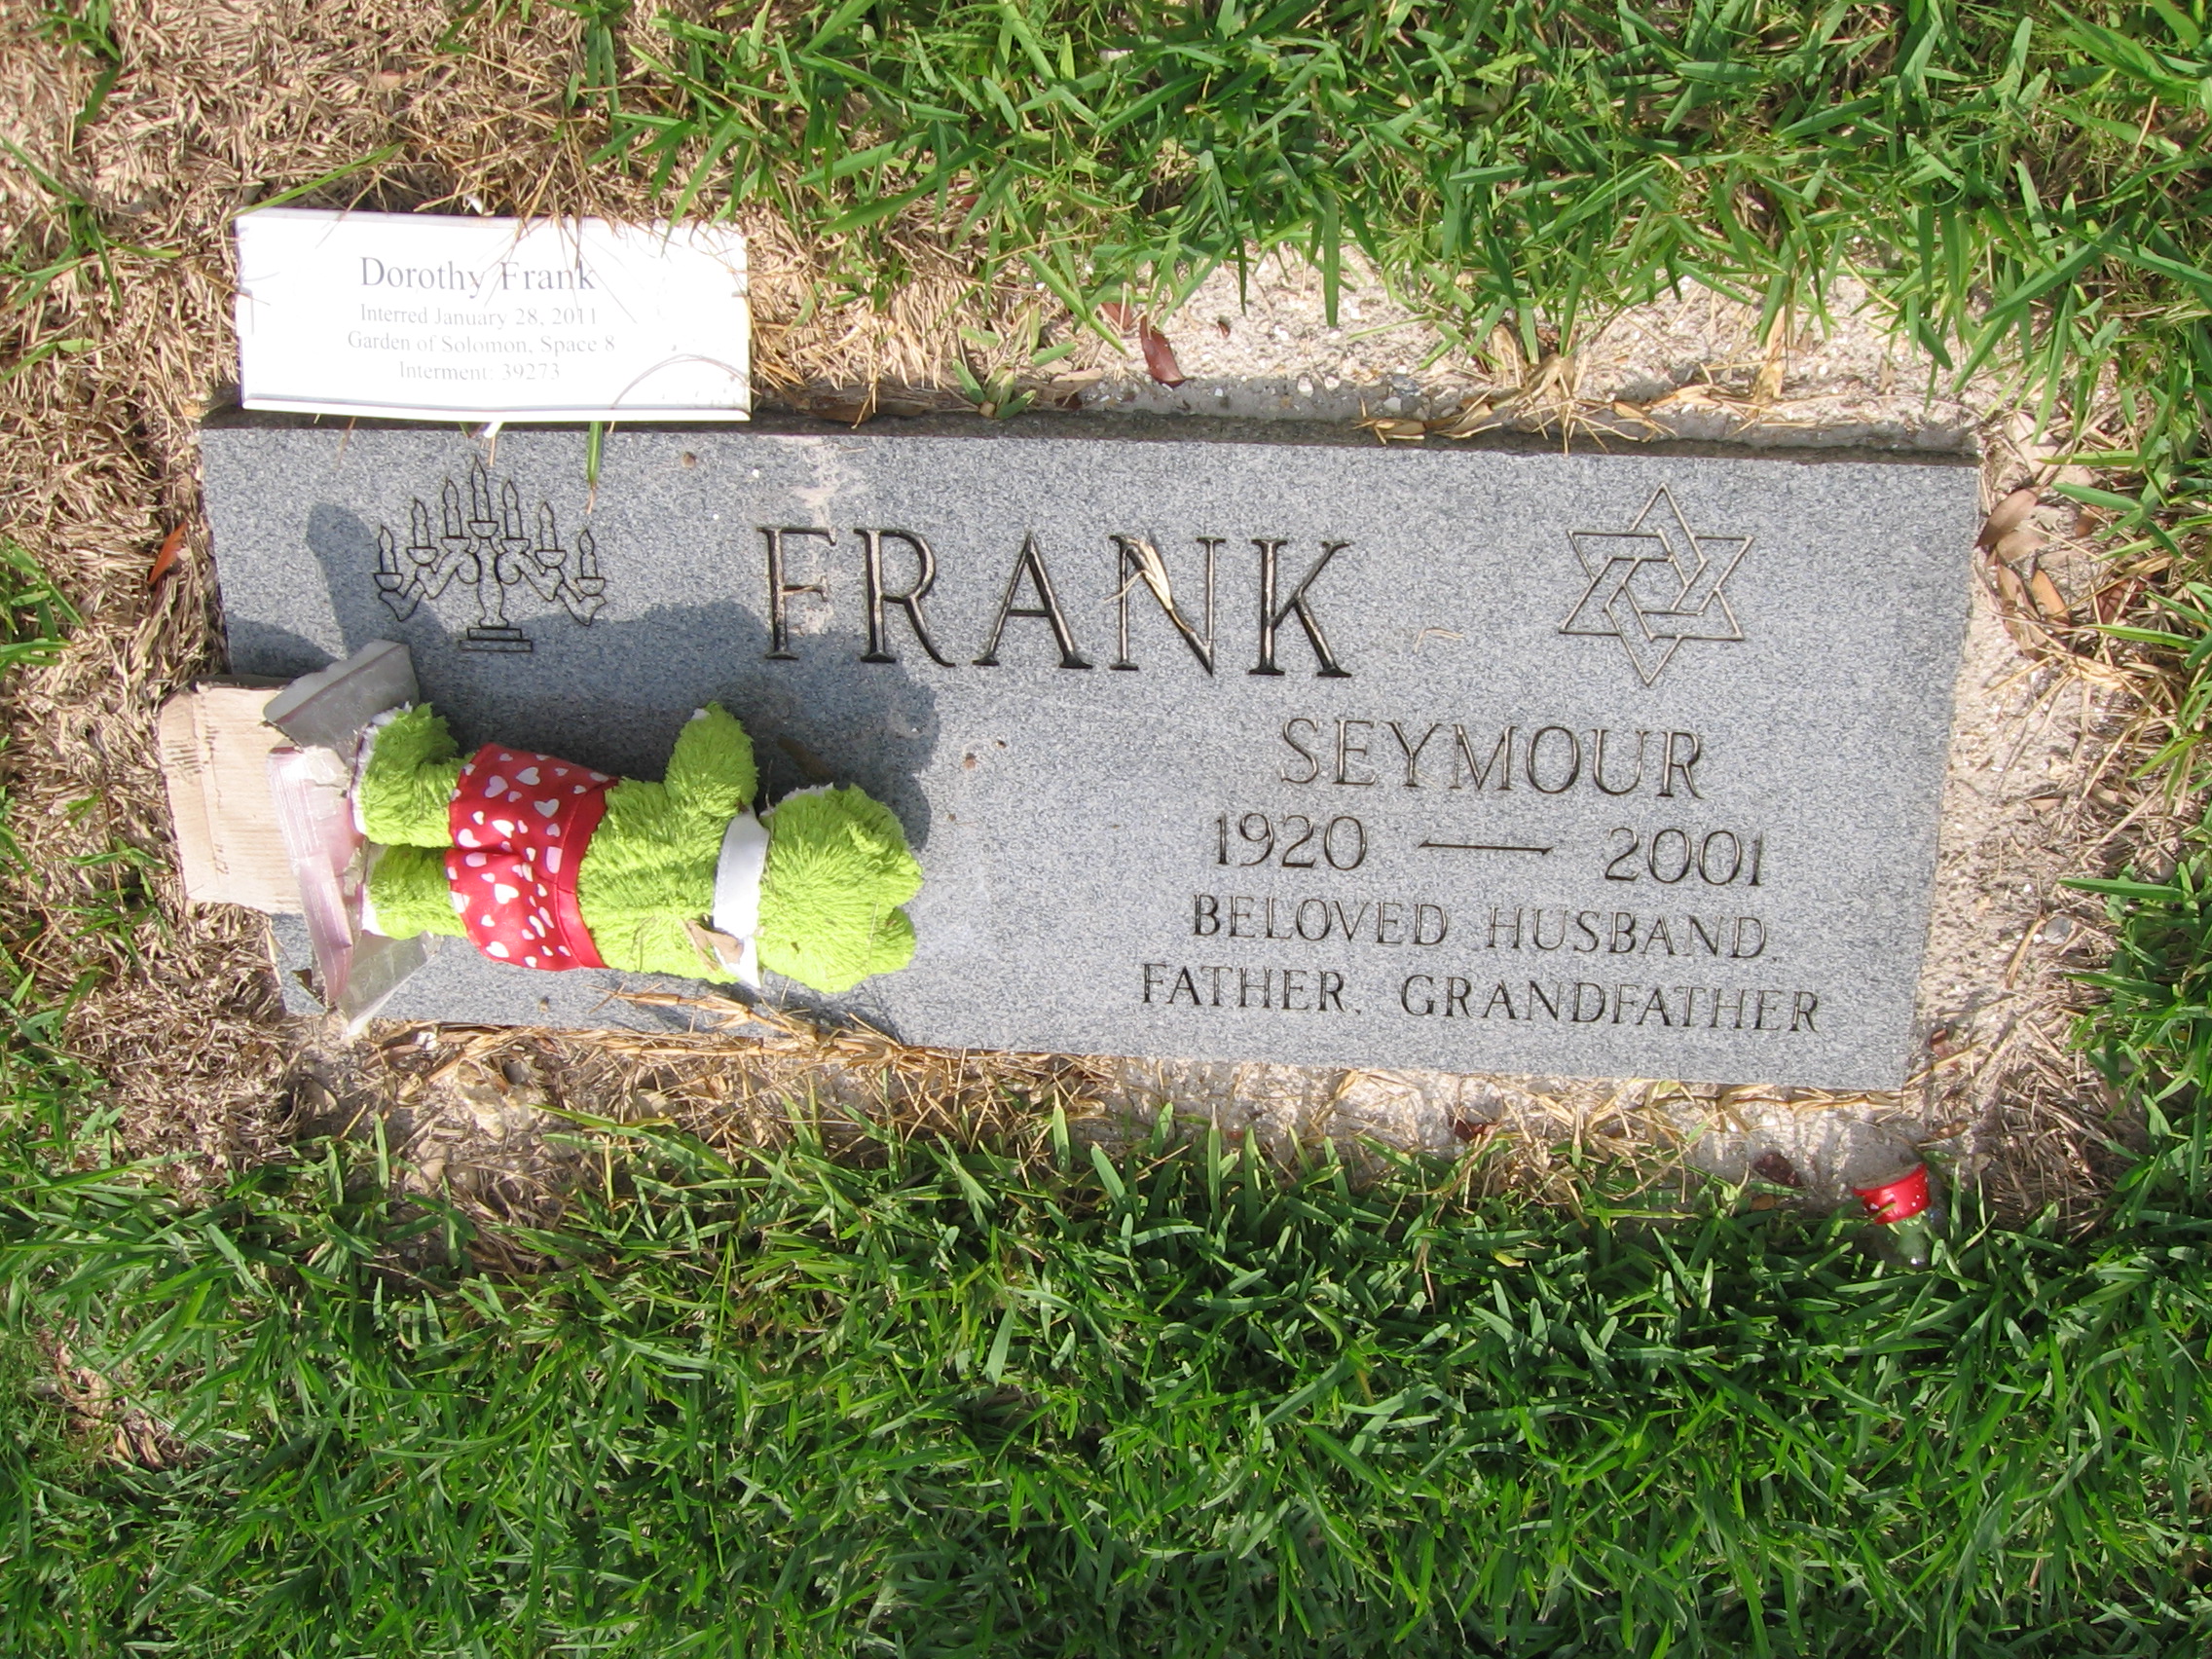 Seymour Frank